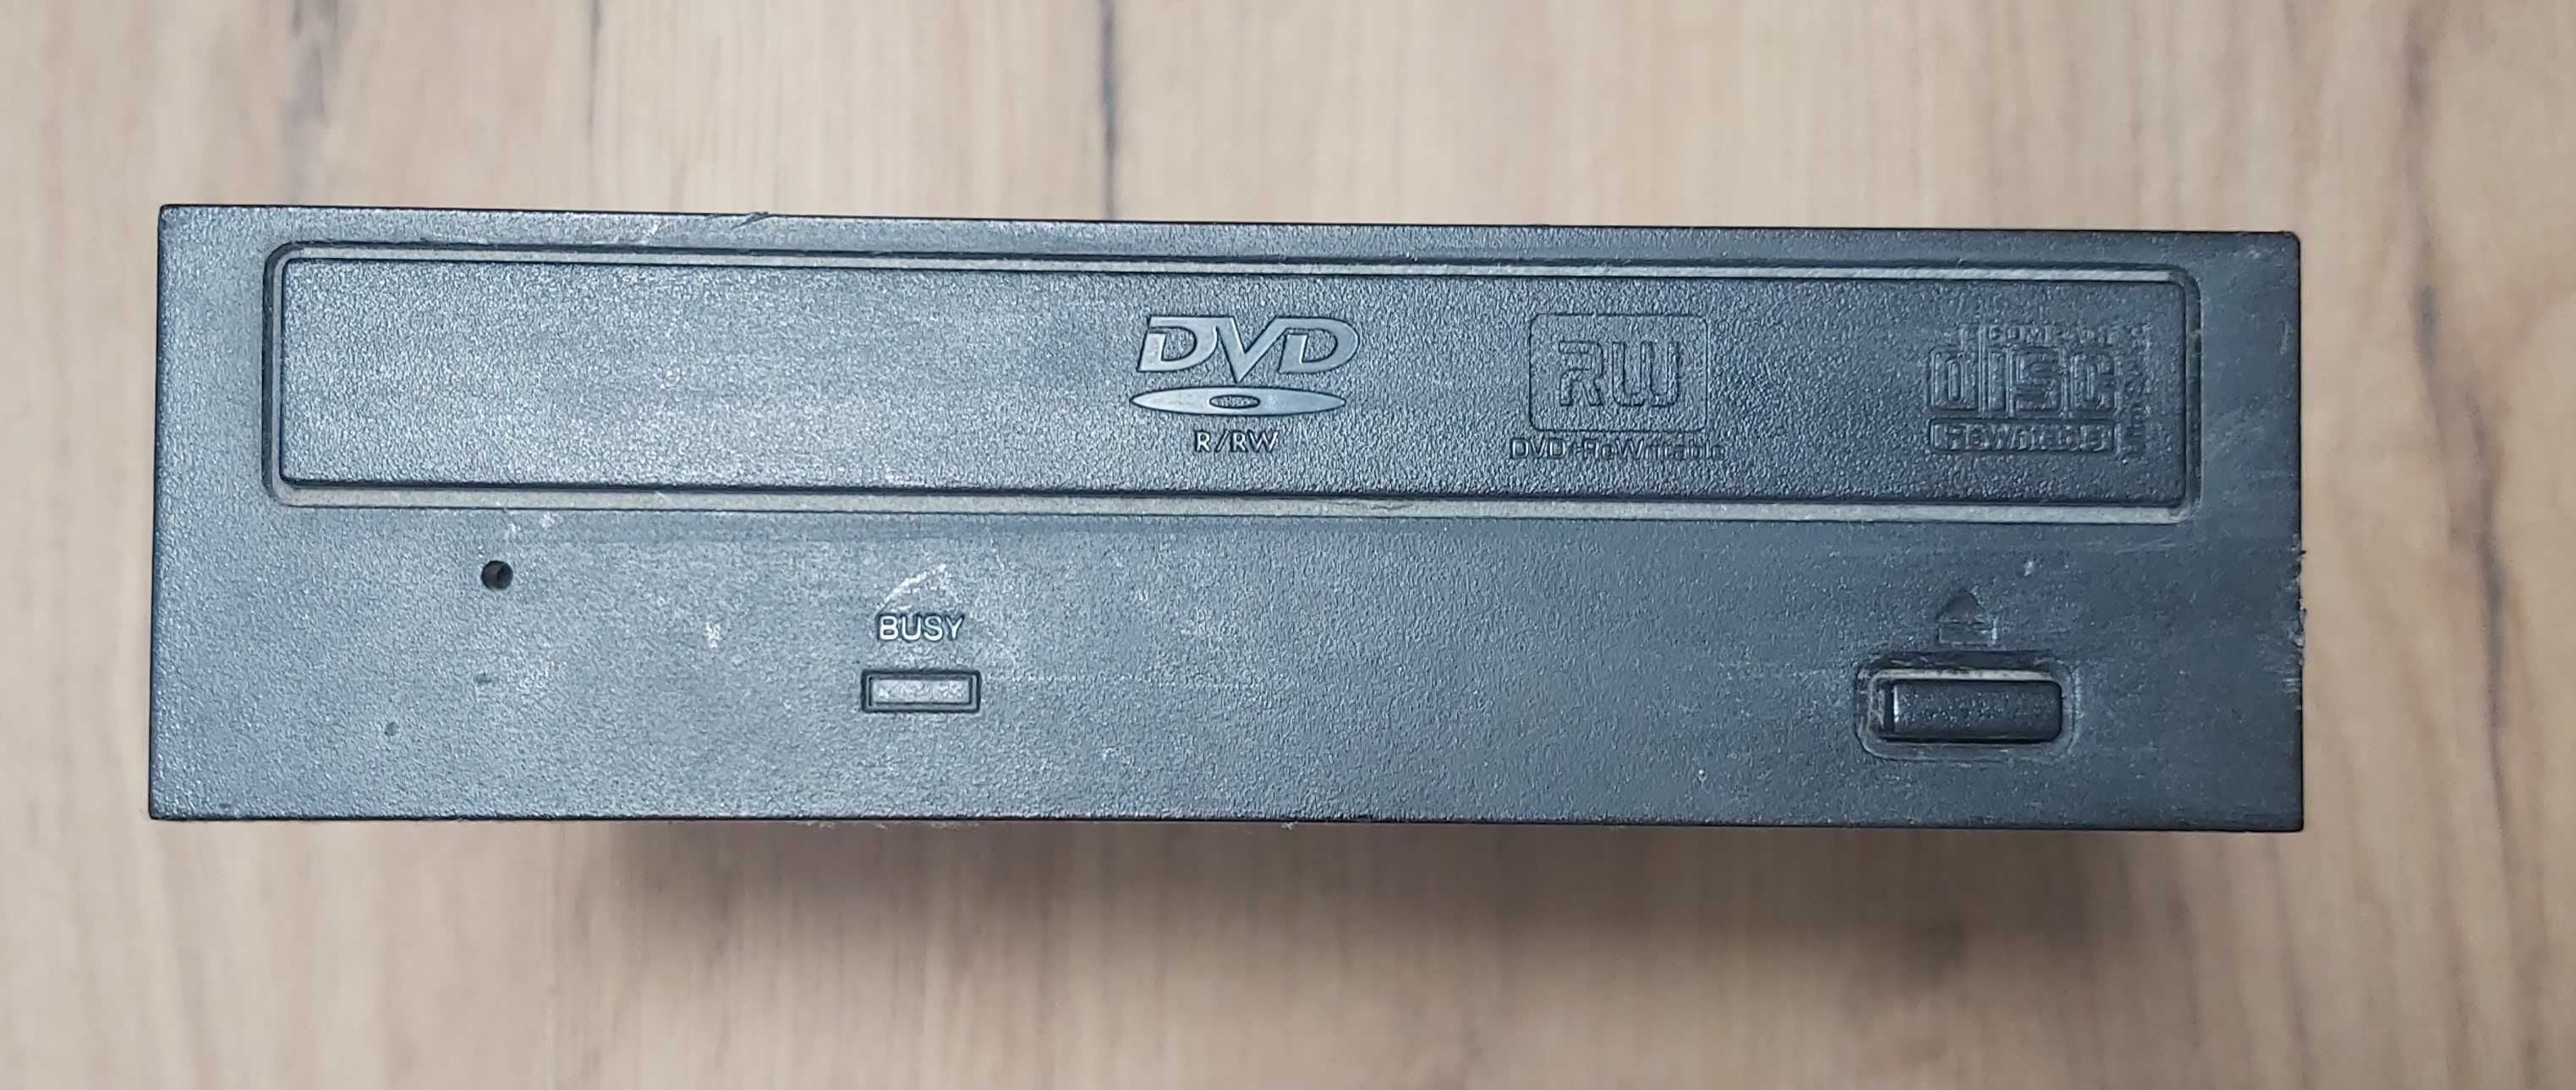 Napęd DVD Pioneer DVR-111 DBK